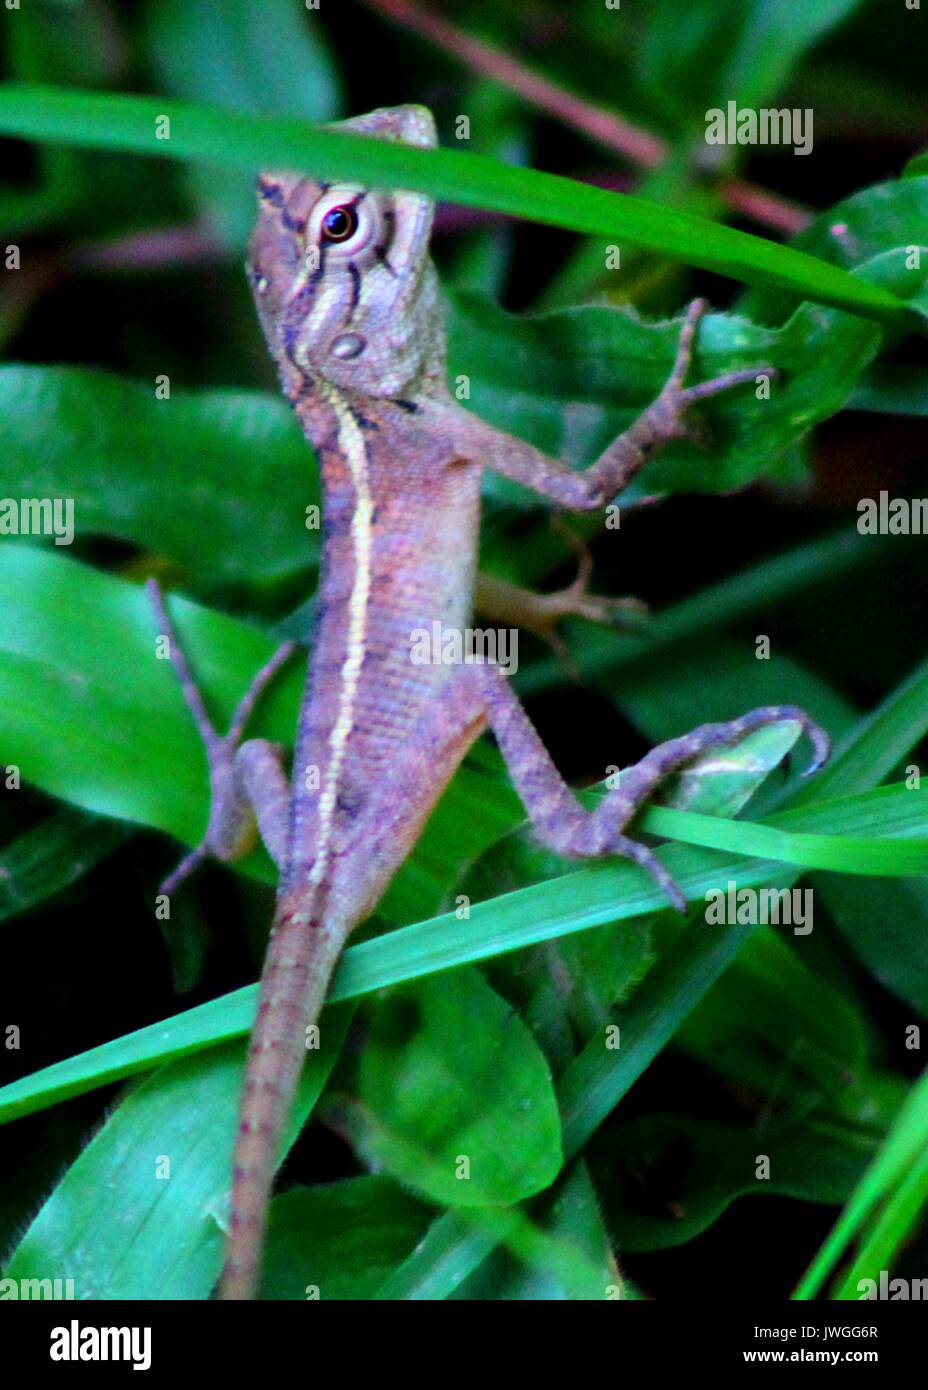 close up of a small garden lizard / tree lizard seen in  Sri Lanka Stock Photo